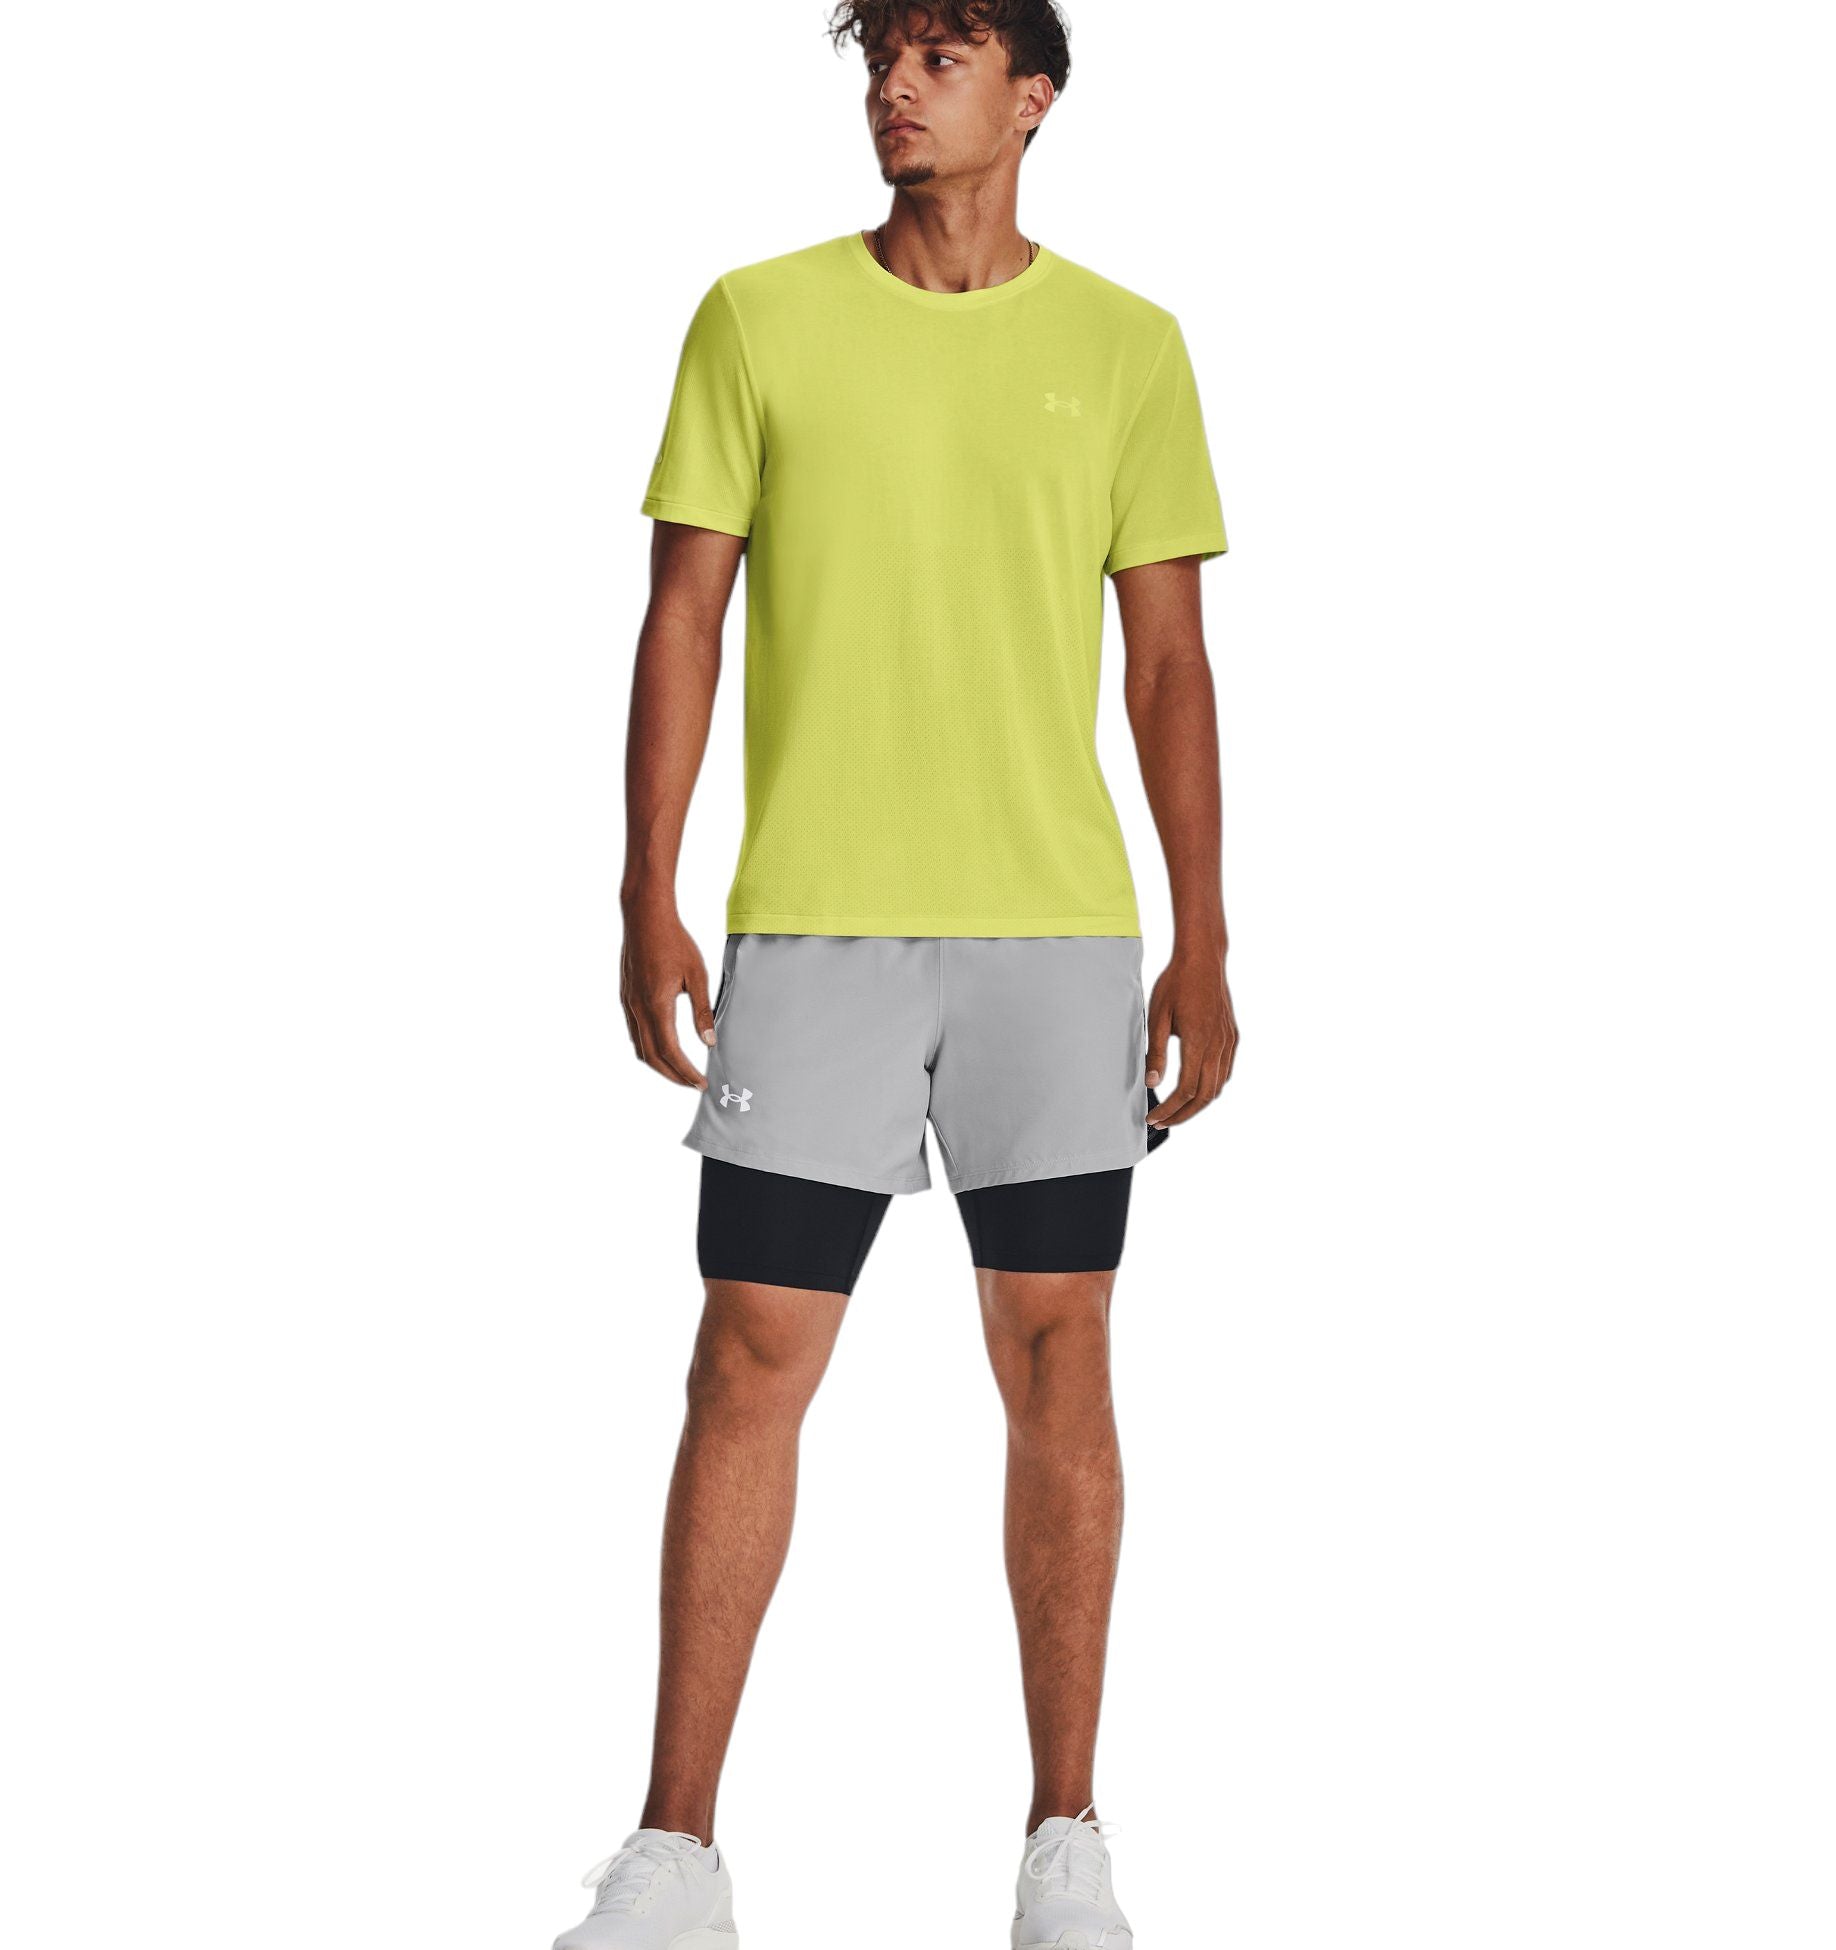 Men's Seamless Stride T-shirt Lime Yellow/Reflective 